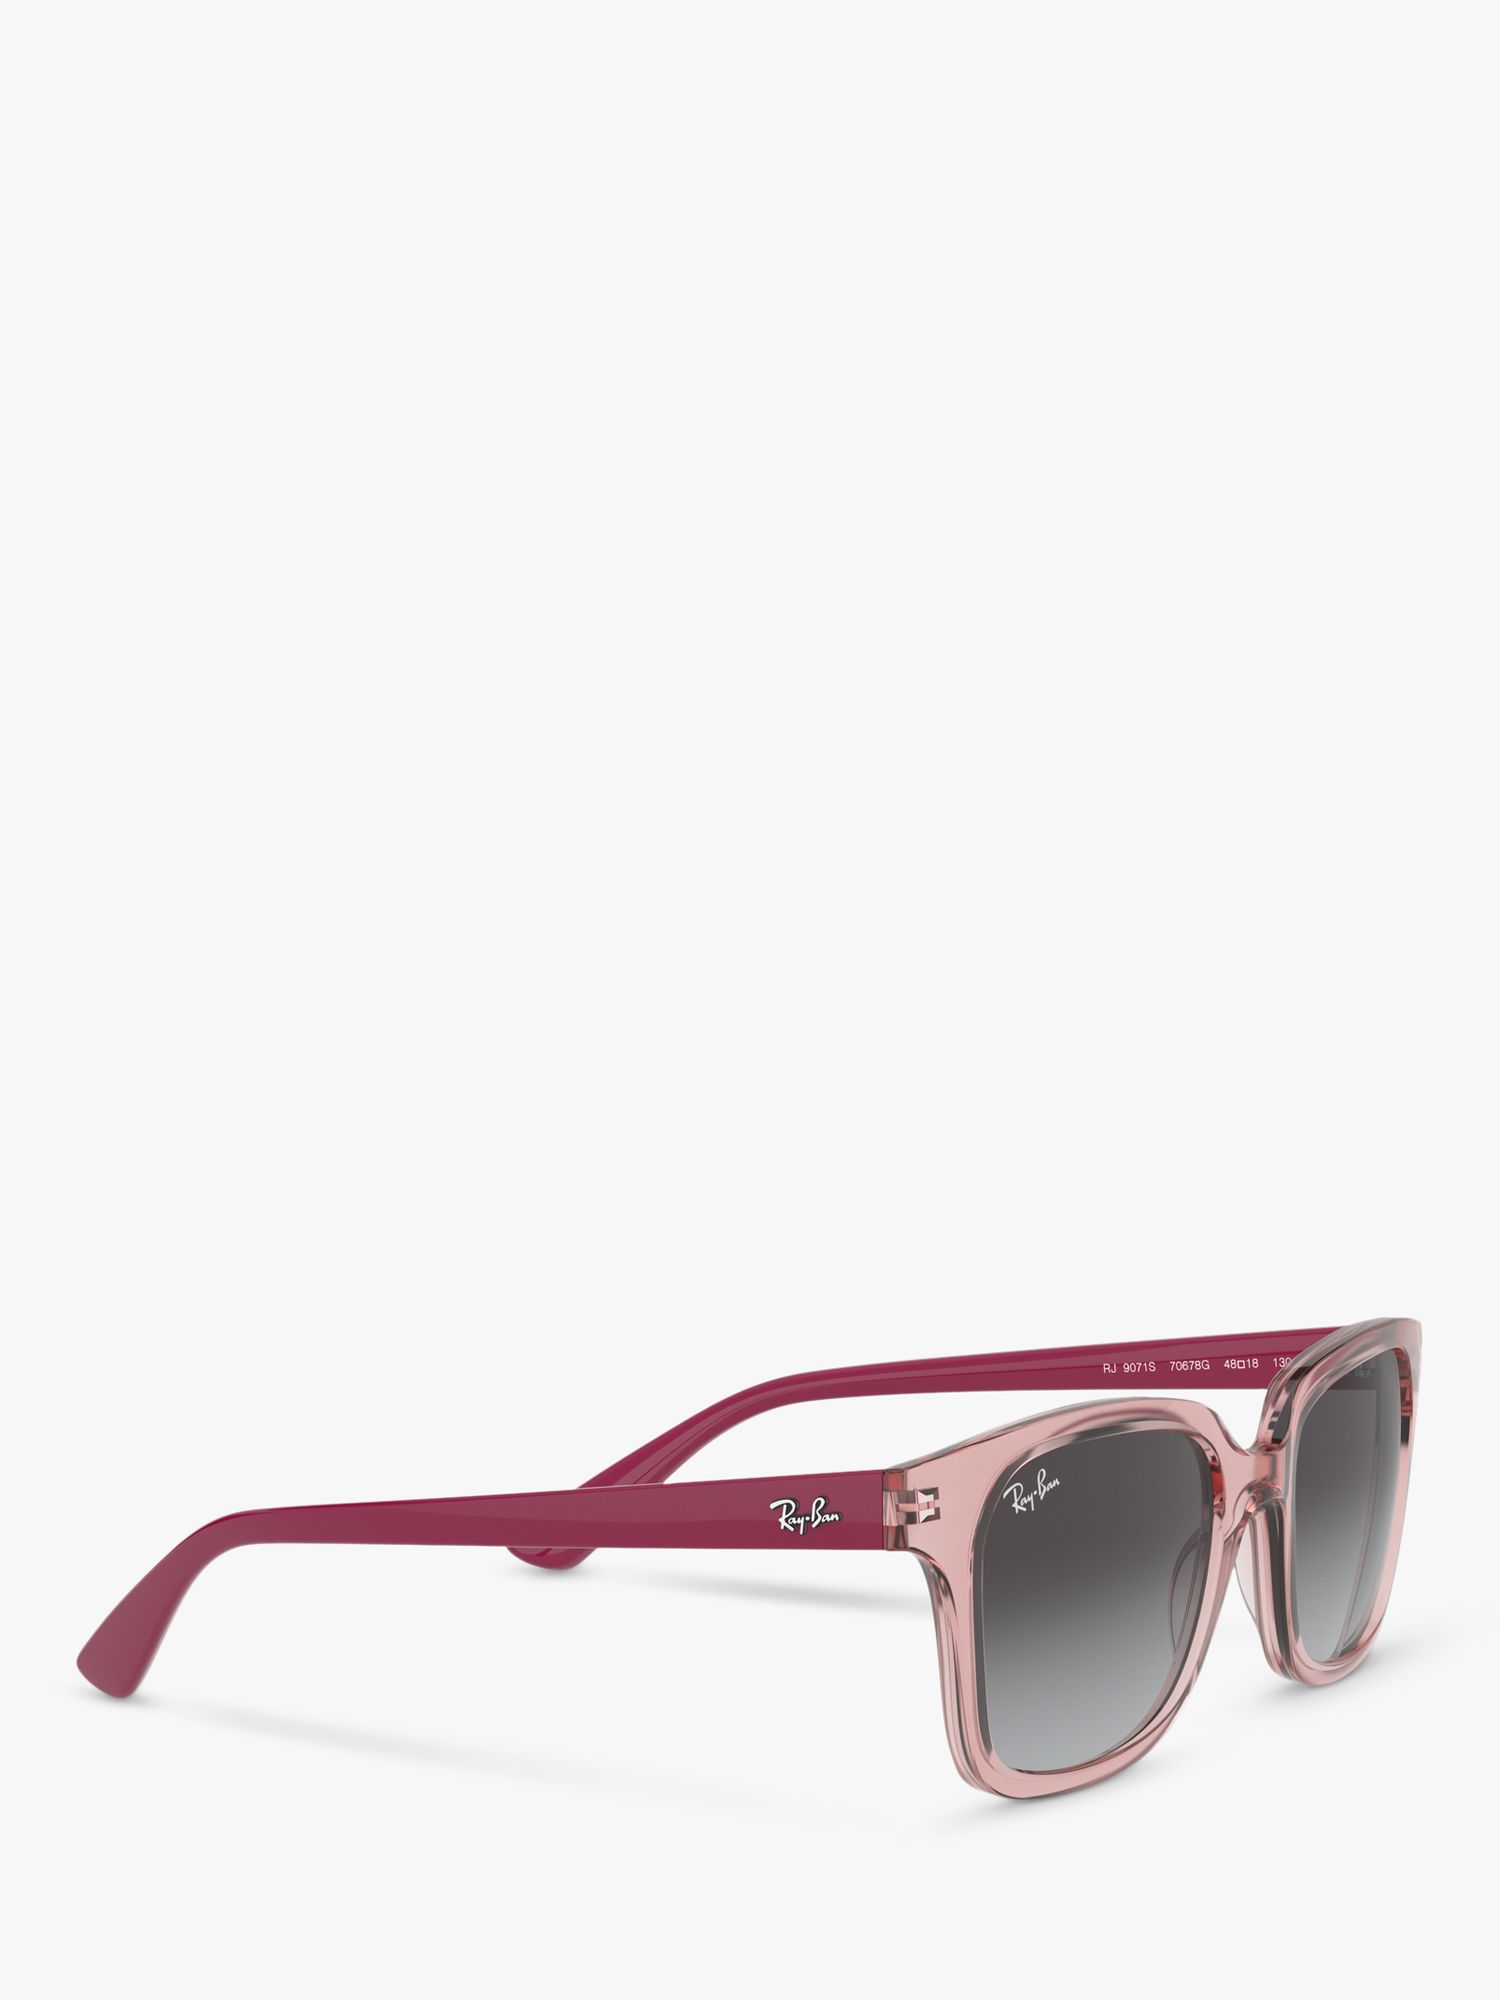 Ray-Ban Junior RJ9071S Unisex Square Sunglasses, Transparent Pink/Grey Gradient